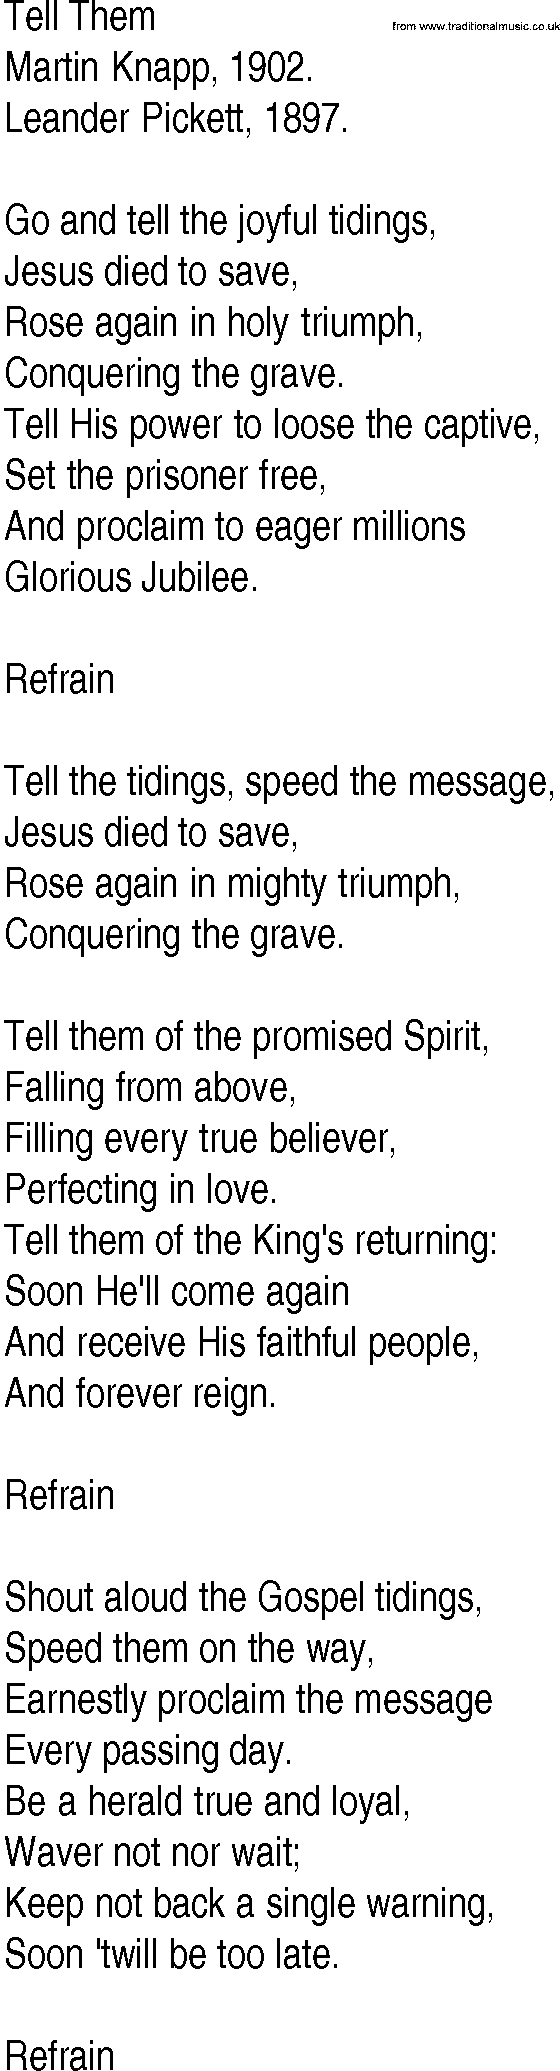 Hymn and Gospel Song: Tell Them by Martin Knapp lyrics